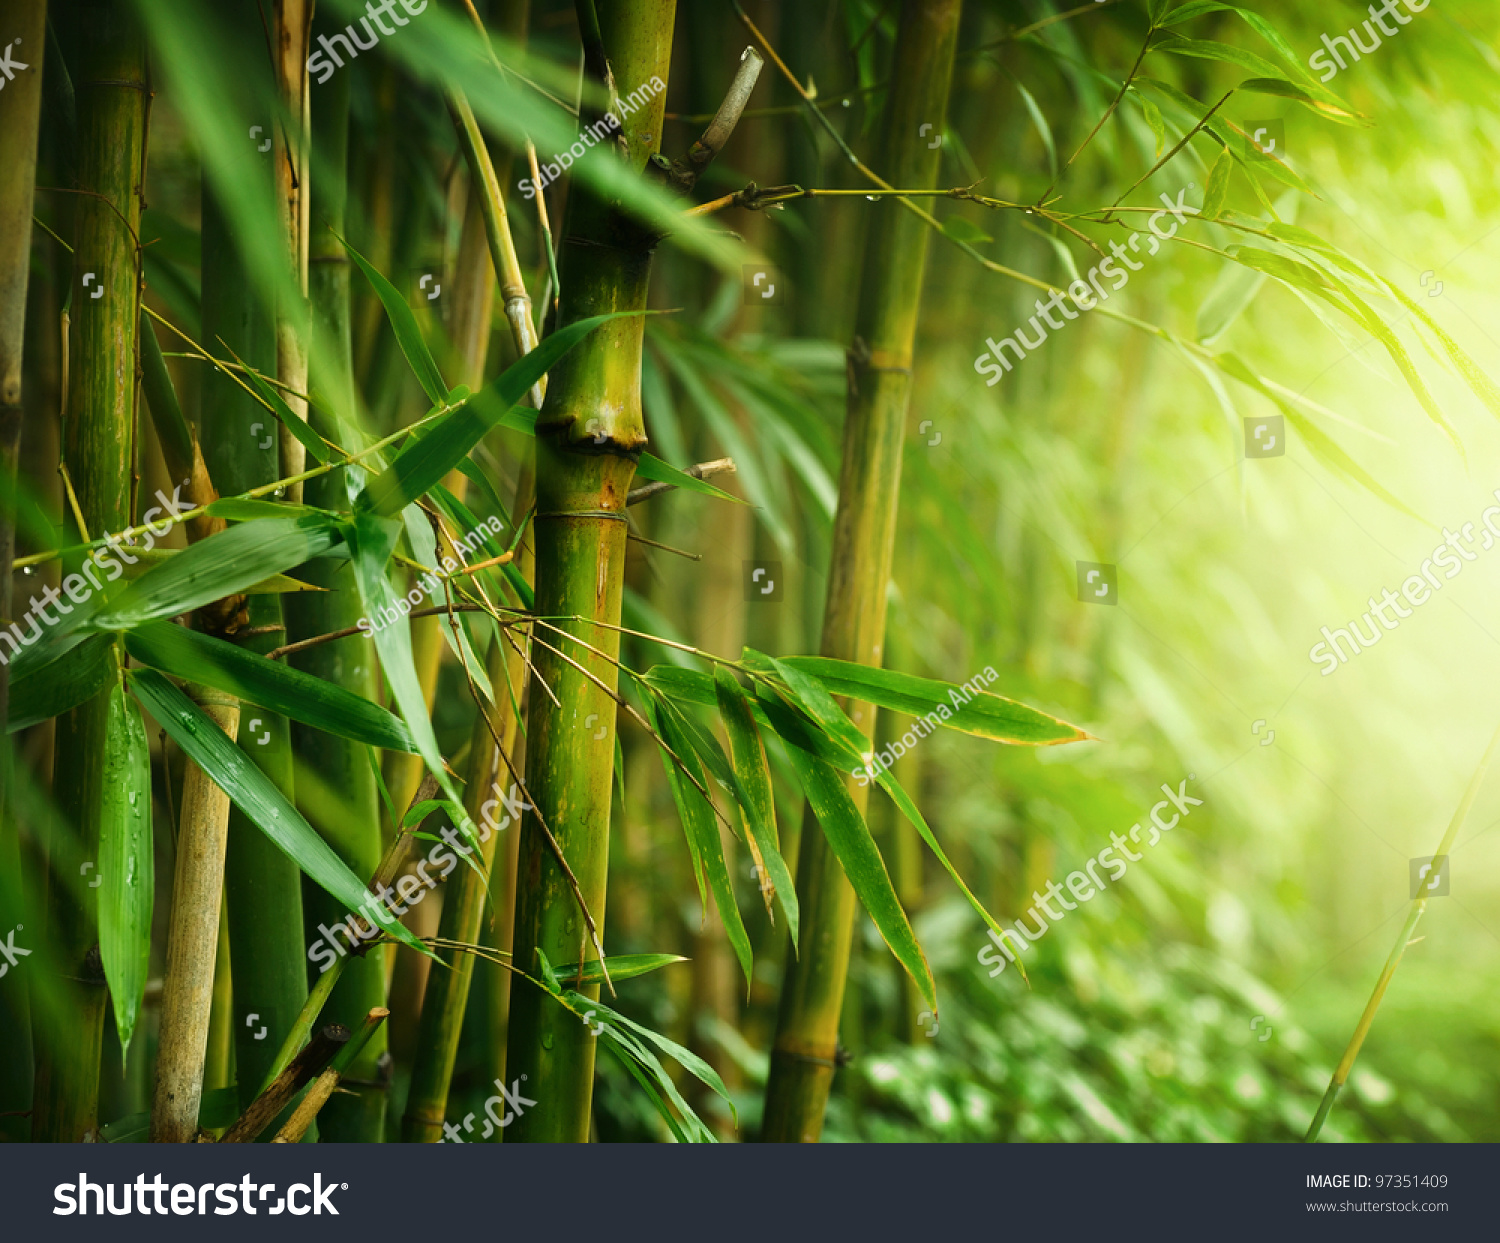 Bamboo #97351409